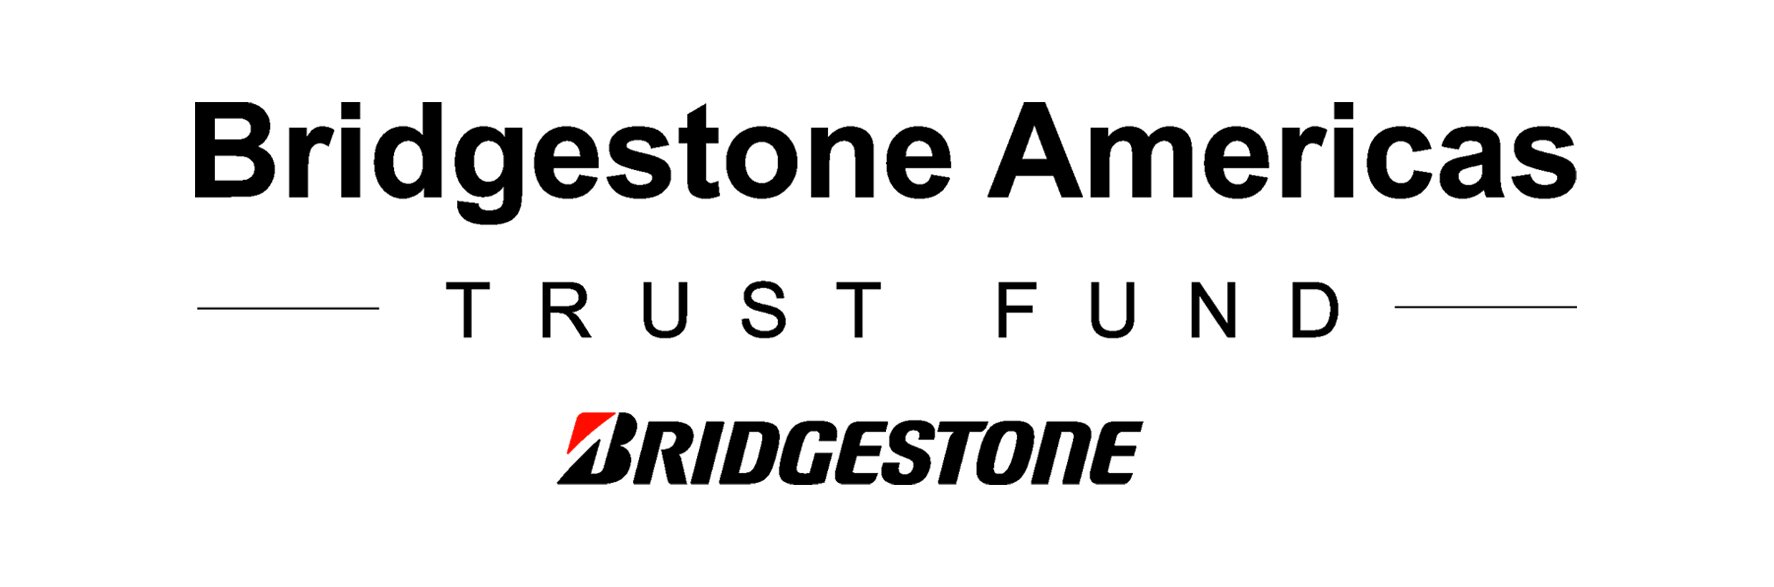 BS Americas Trust Fund logo Arial clr_NEW.jpg